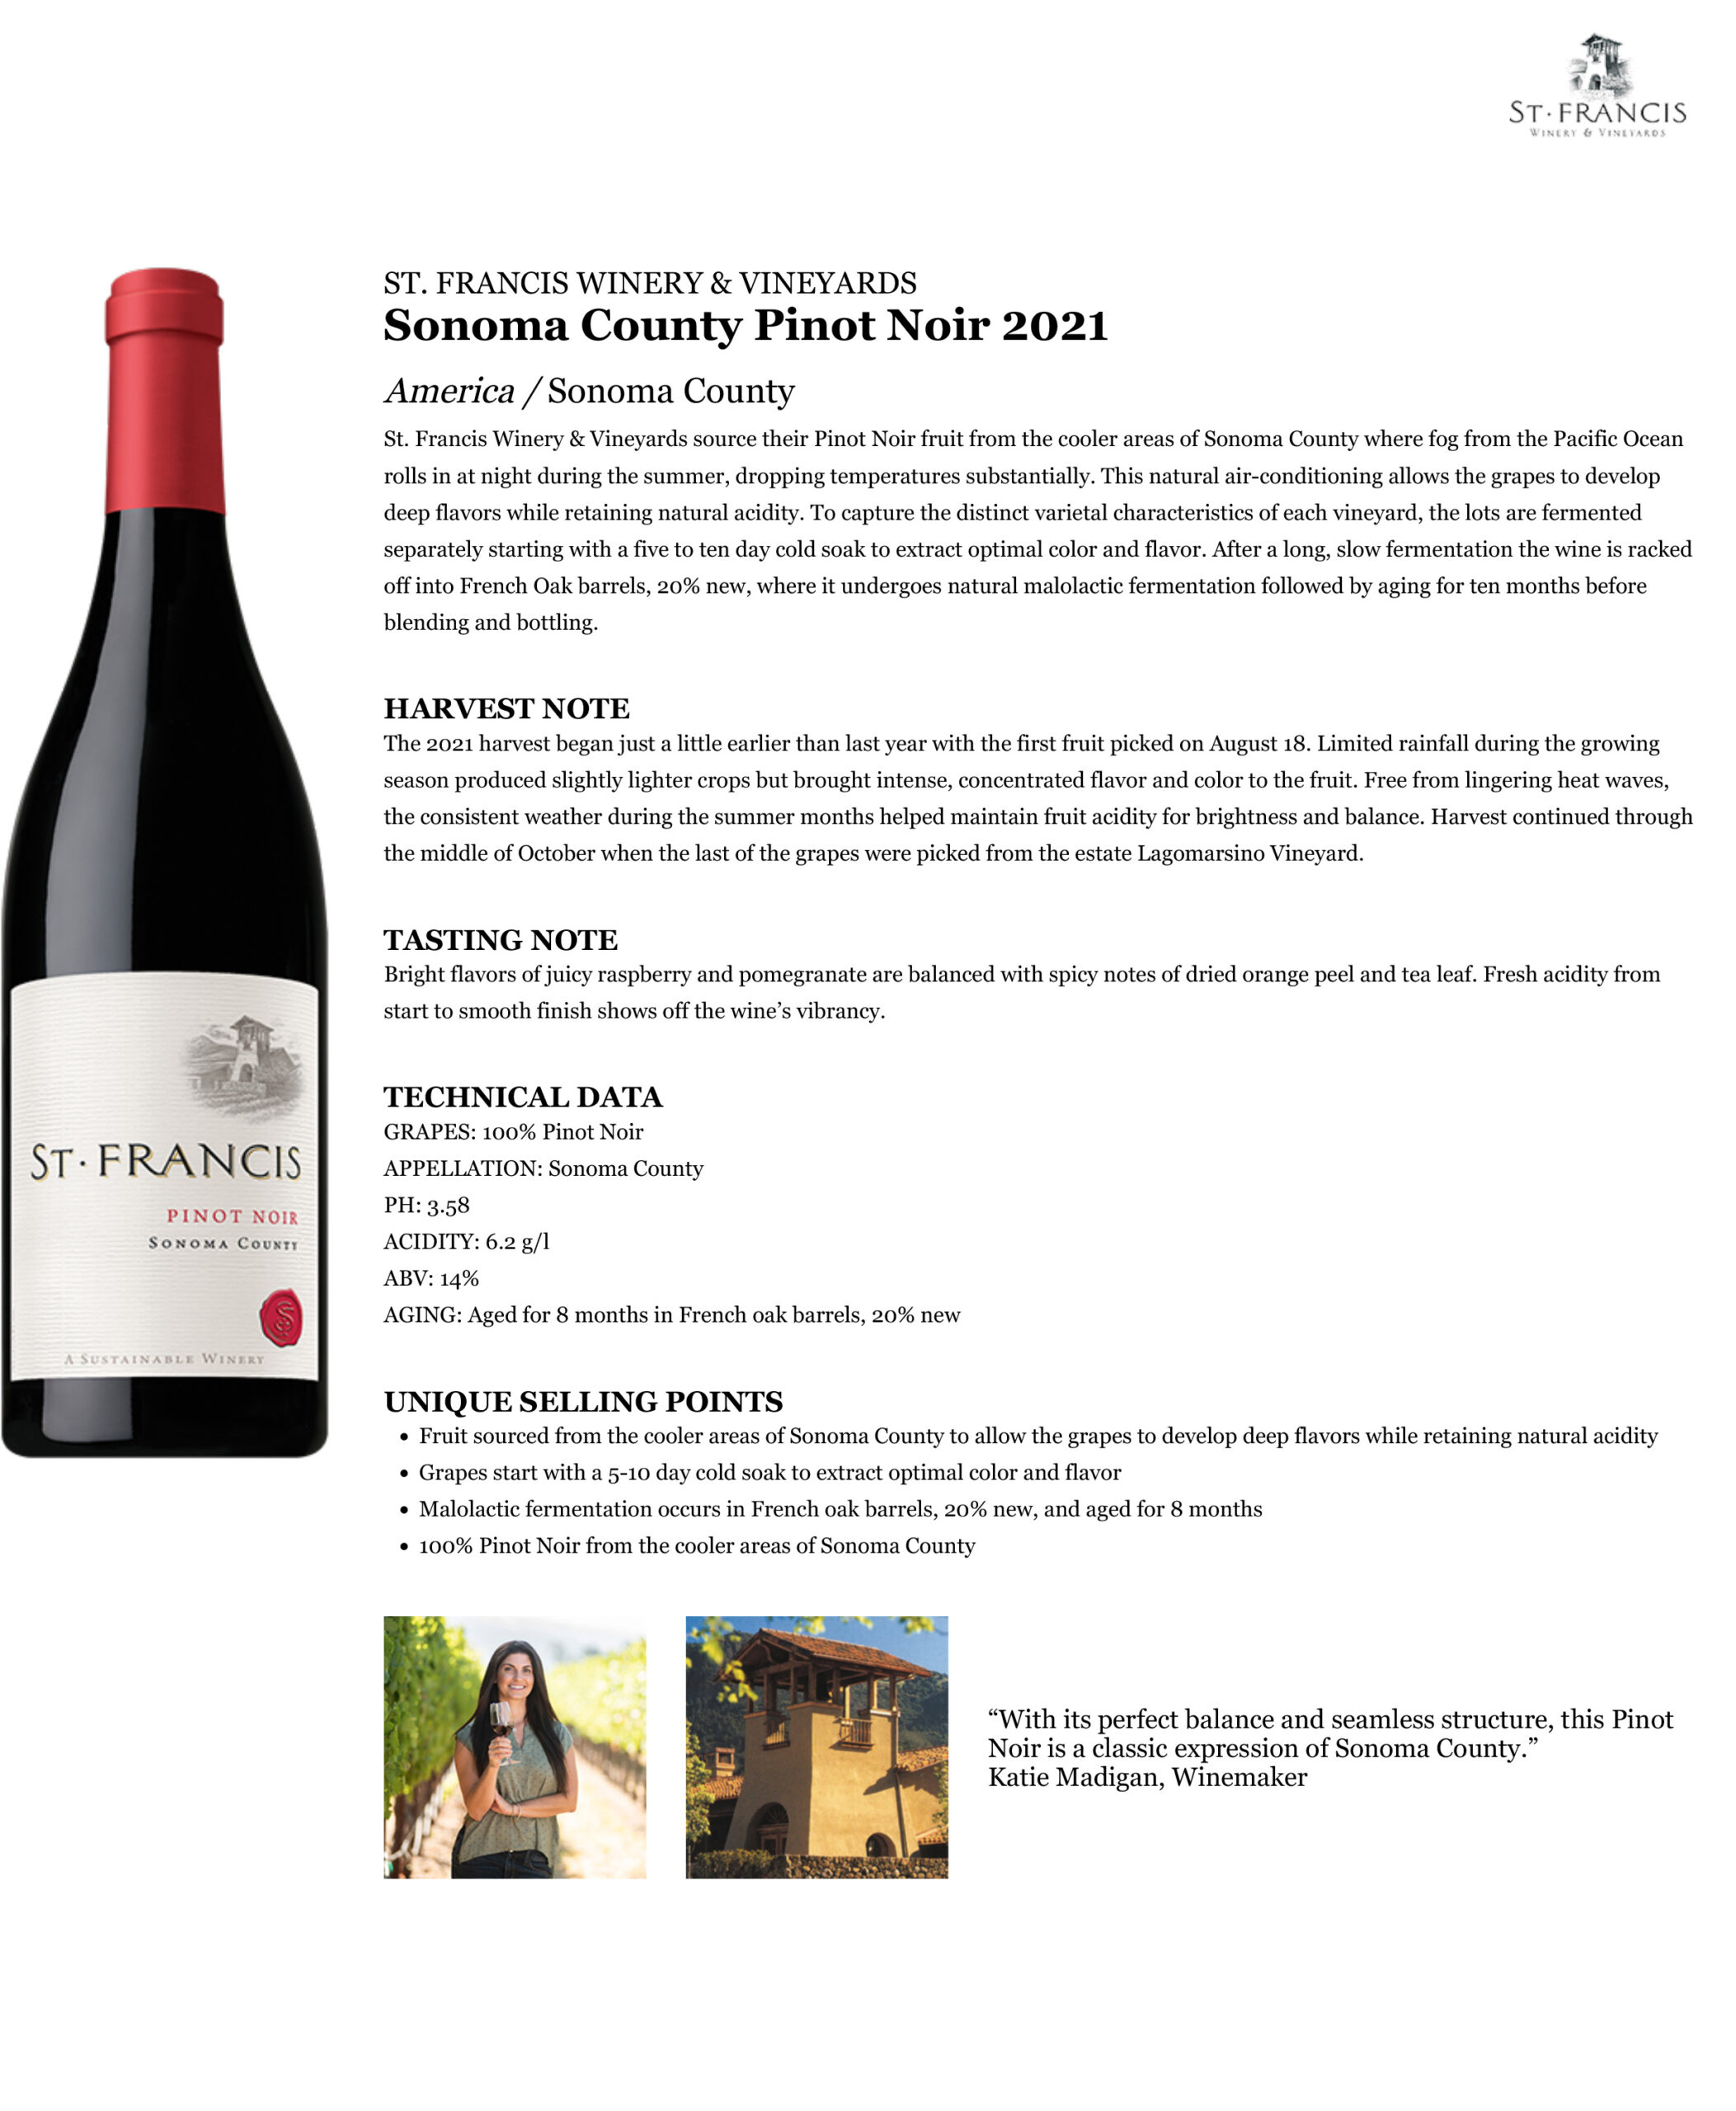 Sonoma County Pinot Noir 2021 Fact Sheet